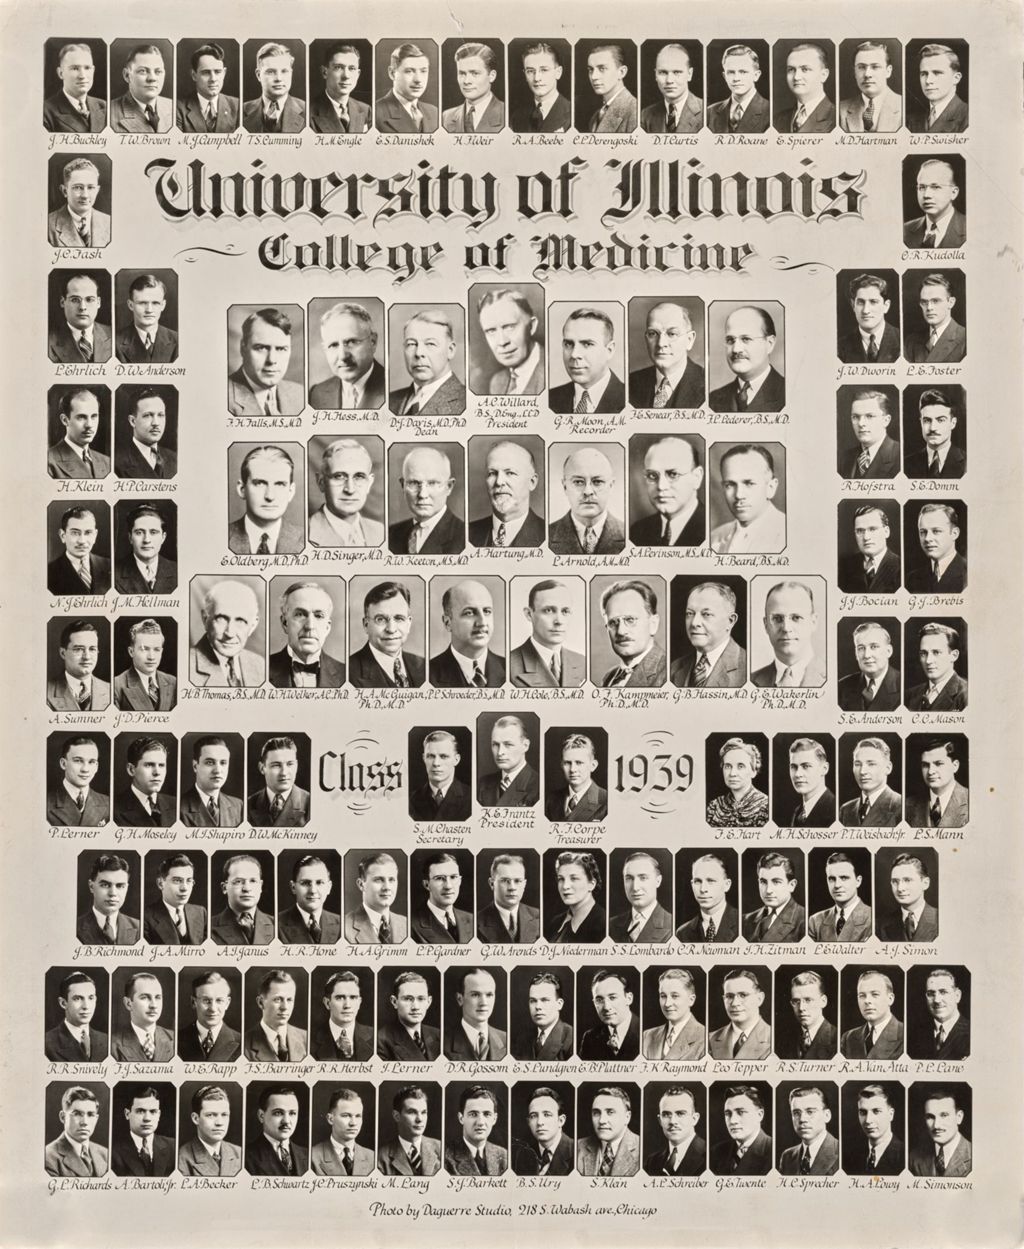 Miniature of 1939 graduating class, University of Illinois College of Medicine